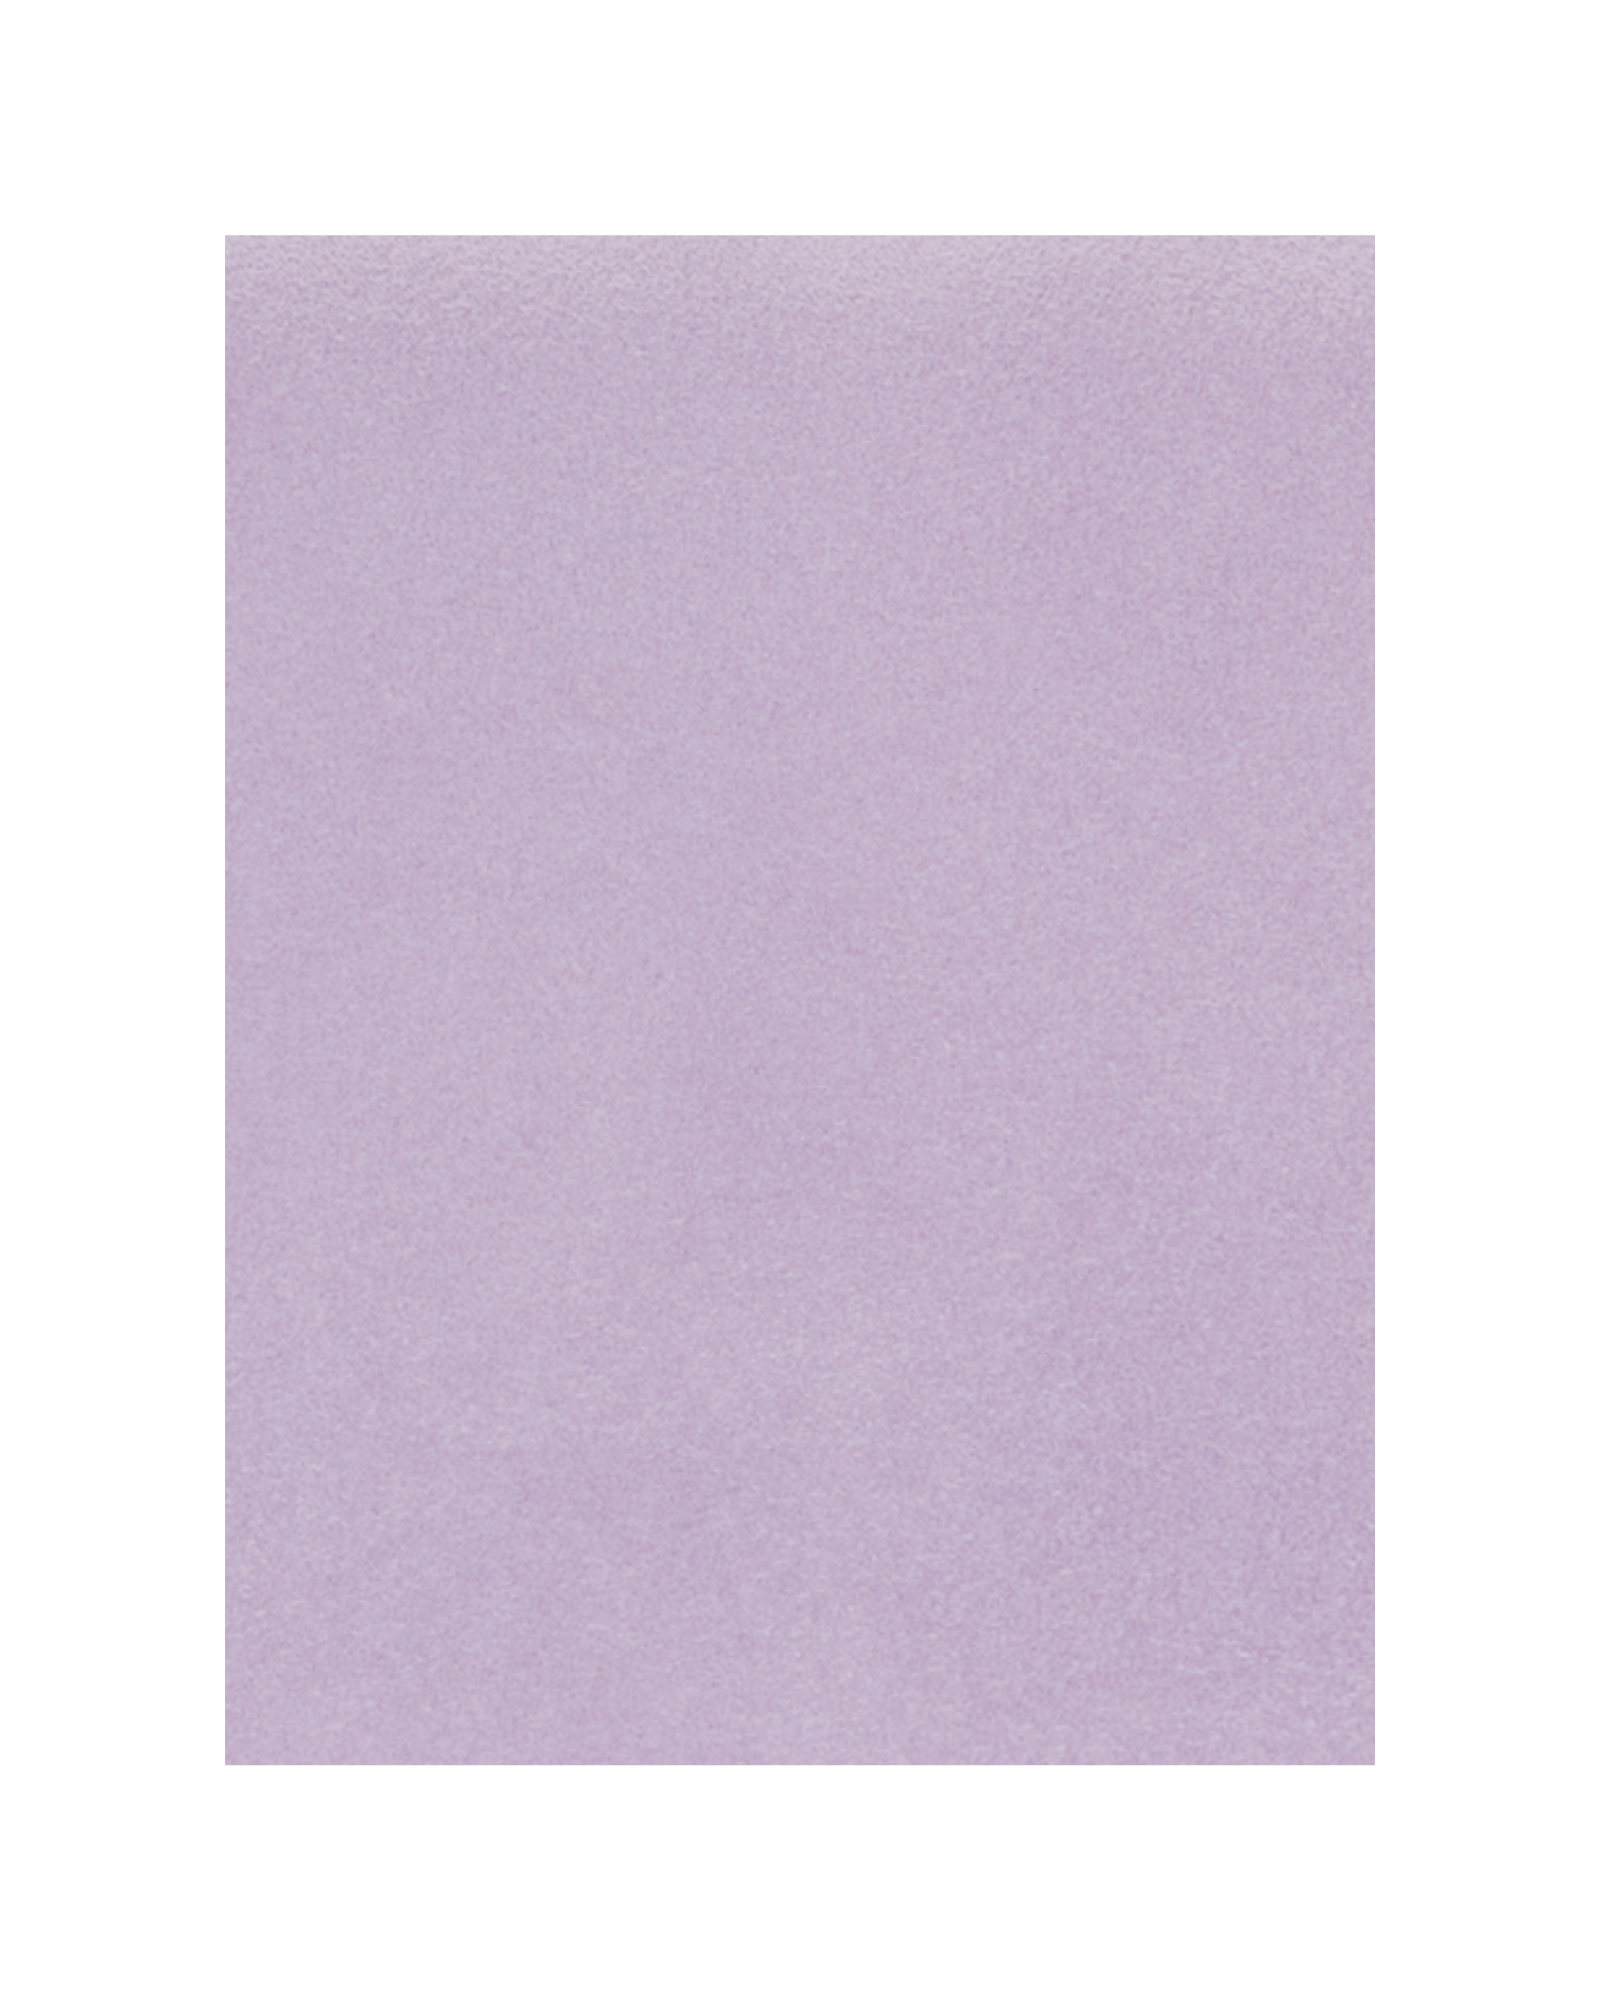 Lilac Suede image